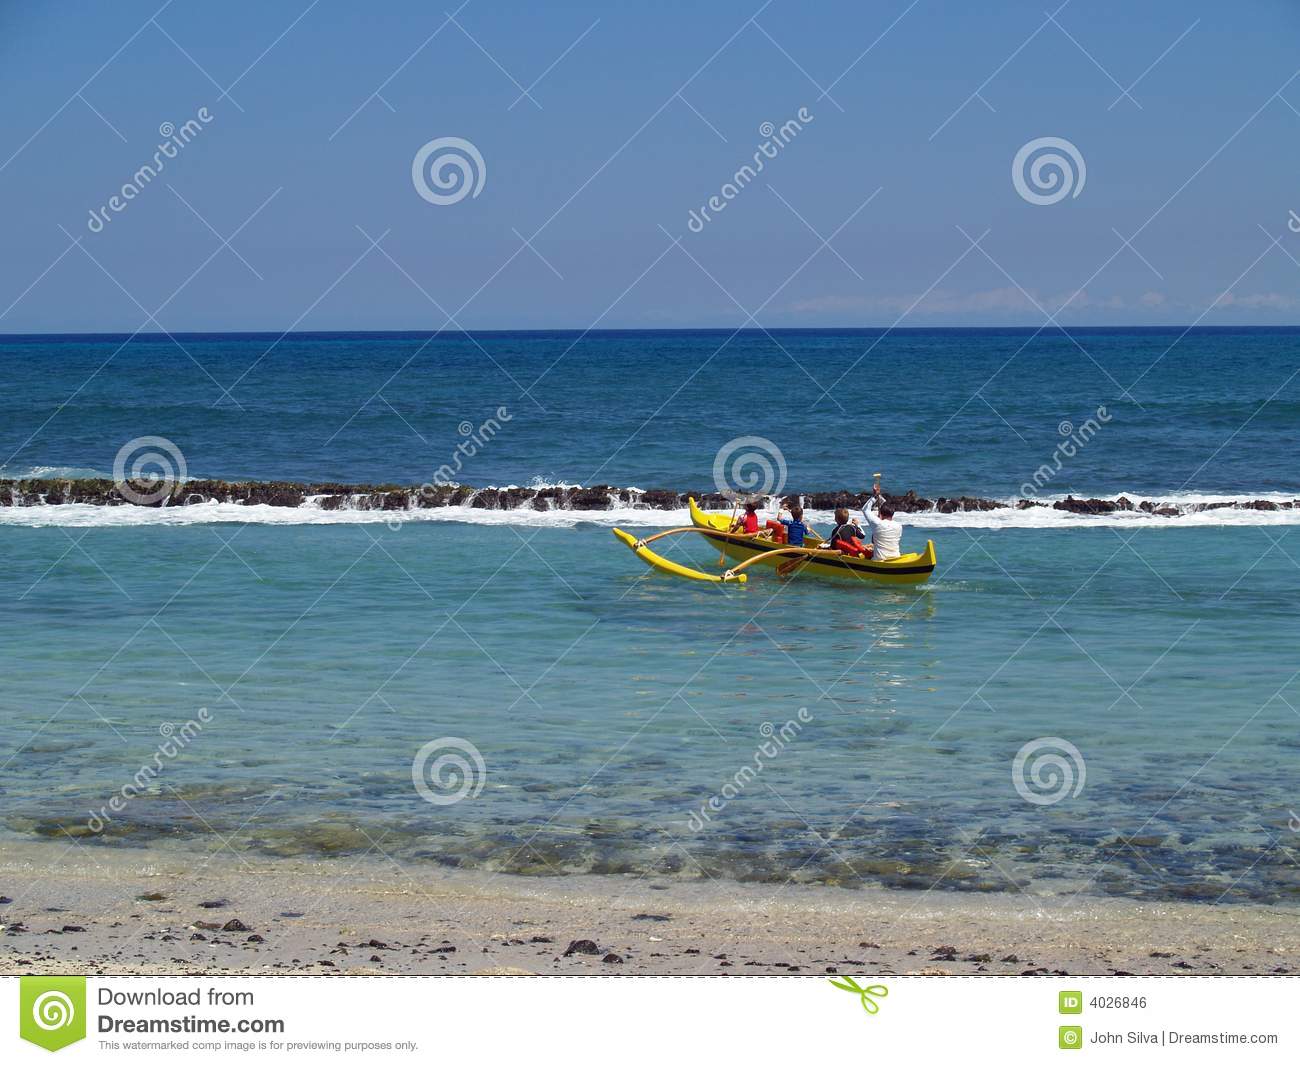 Outrigger Canoe Royalty Free Stock Image   Image  4026846